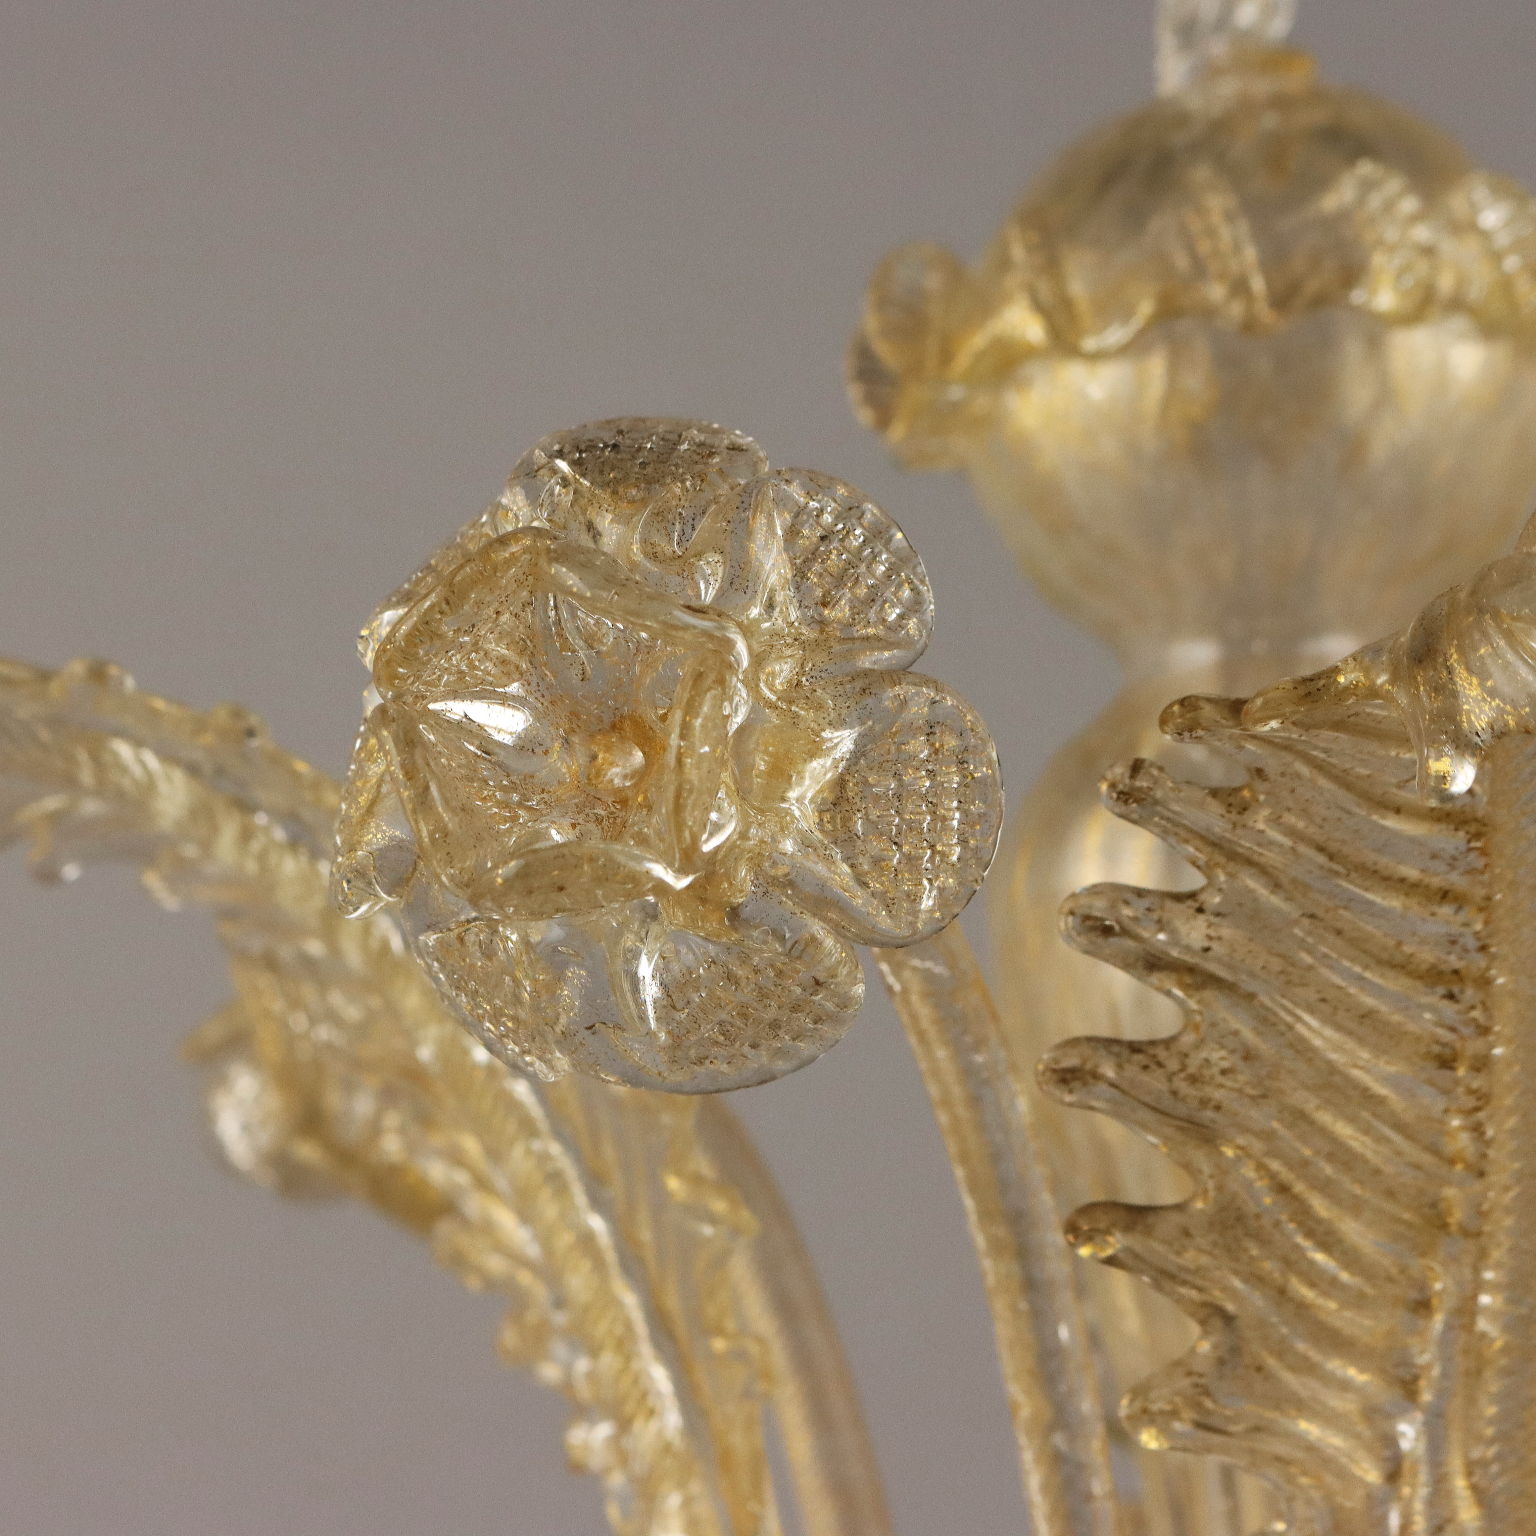 Antique Girandole Lamp Murano Glass Italy XX Century